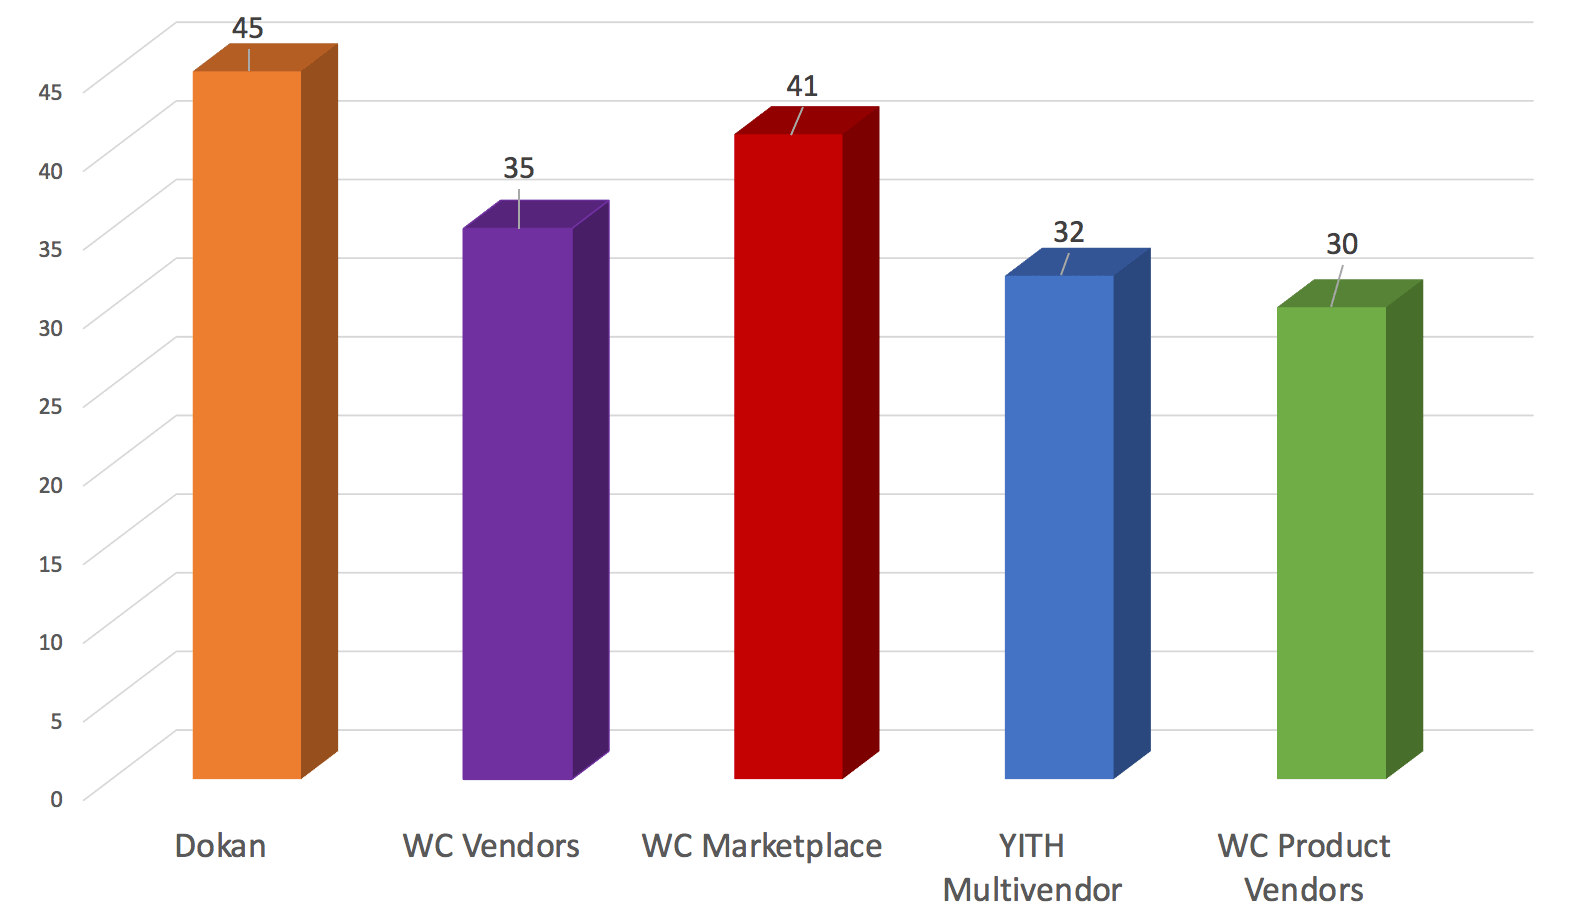 WooCommerce Multi Vendor Marketplace Plugin – WC Vendors